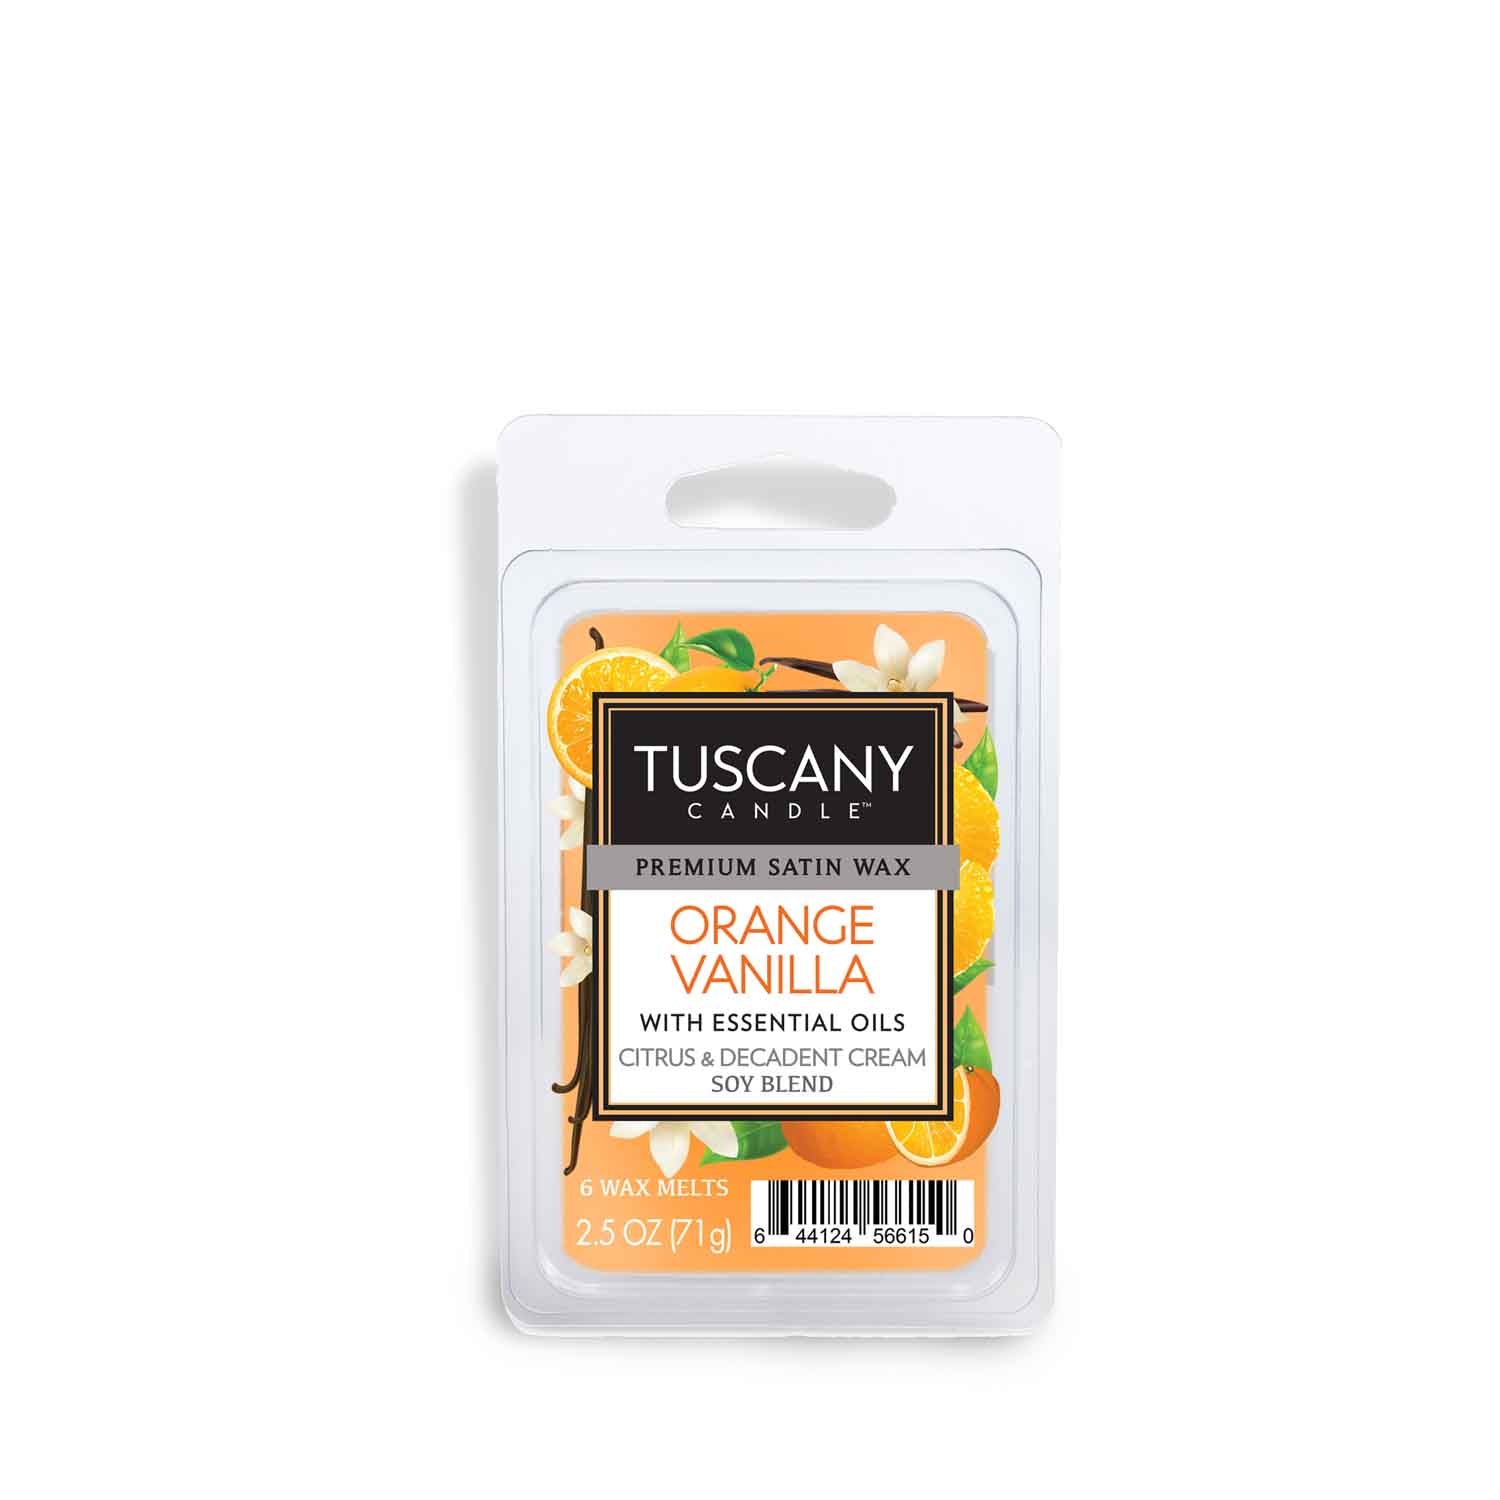 Tuscany Candle® Orange Vanilla Scented Wax Melt (2.5 oz) with fragrance notes of orange and vanilla.